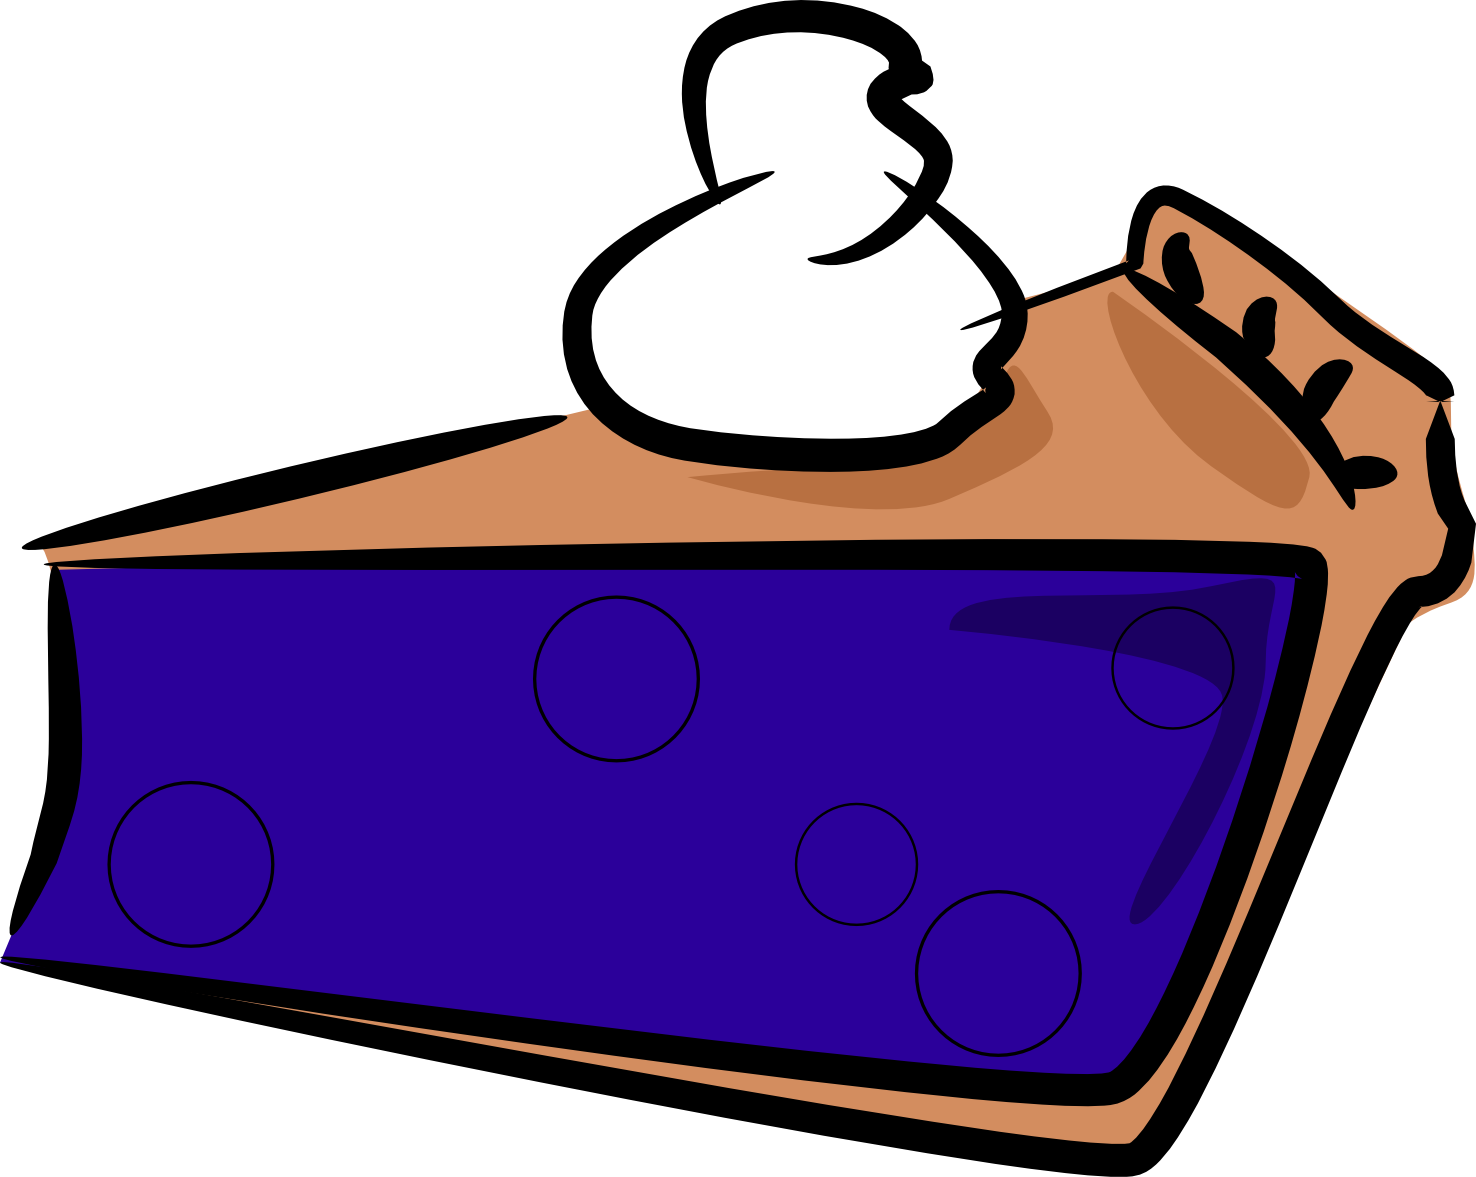 Blueberry Pie Cartoon PNG image